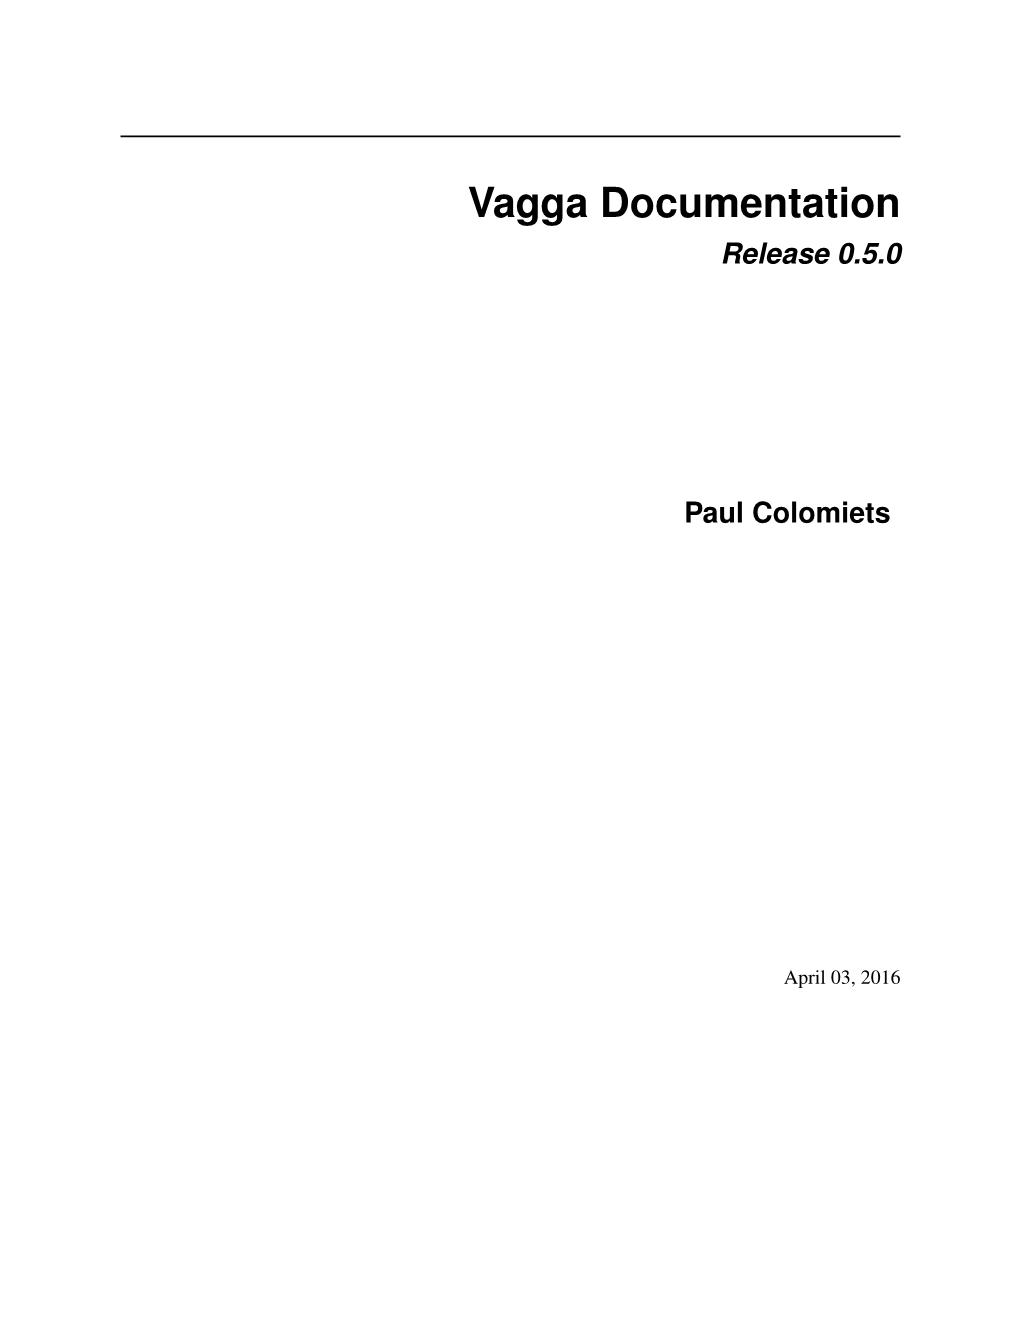 Vagga Documentation Release 0.5.0